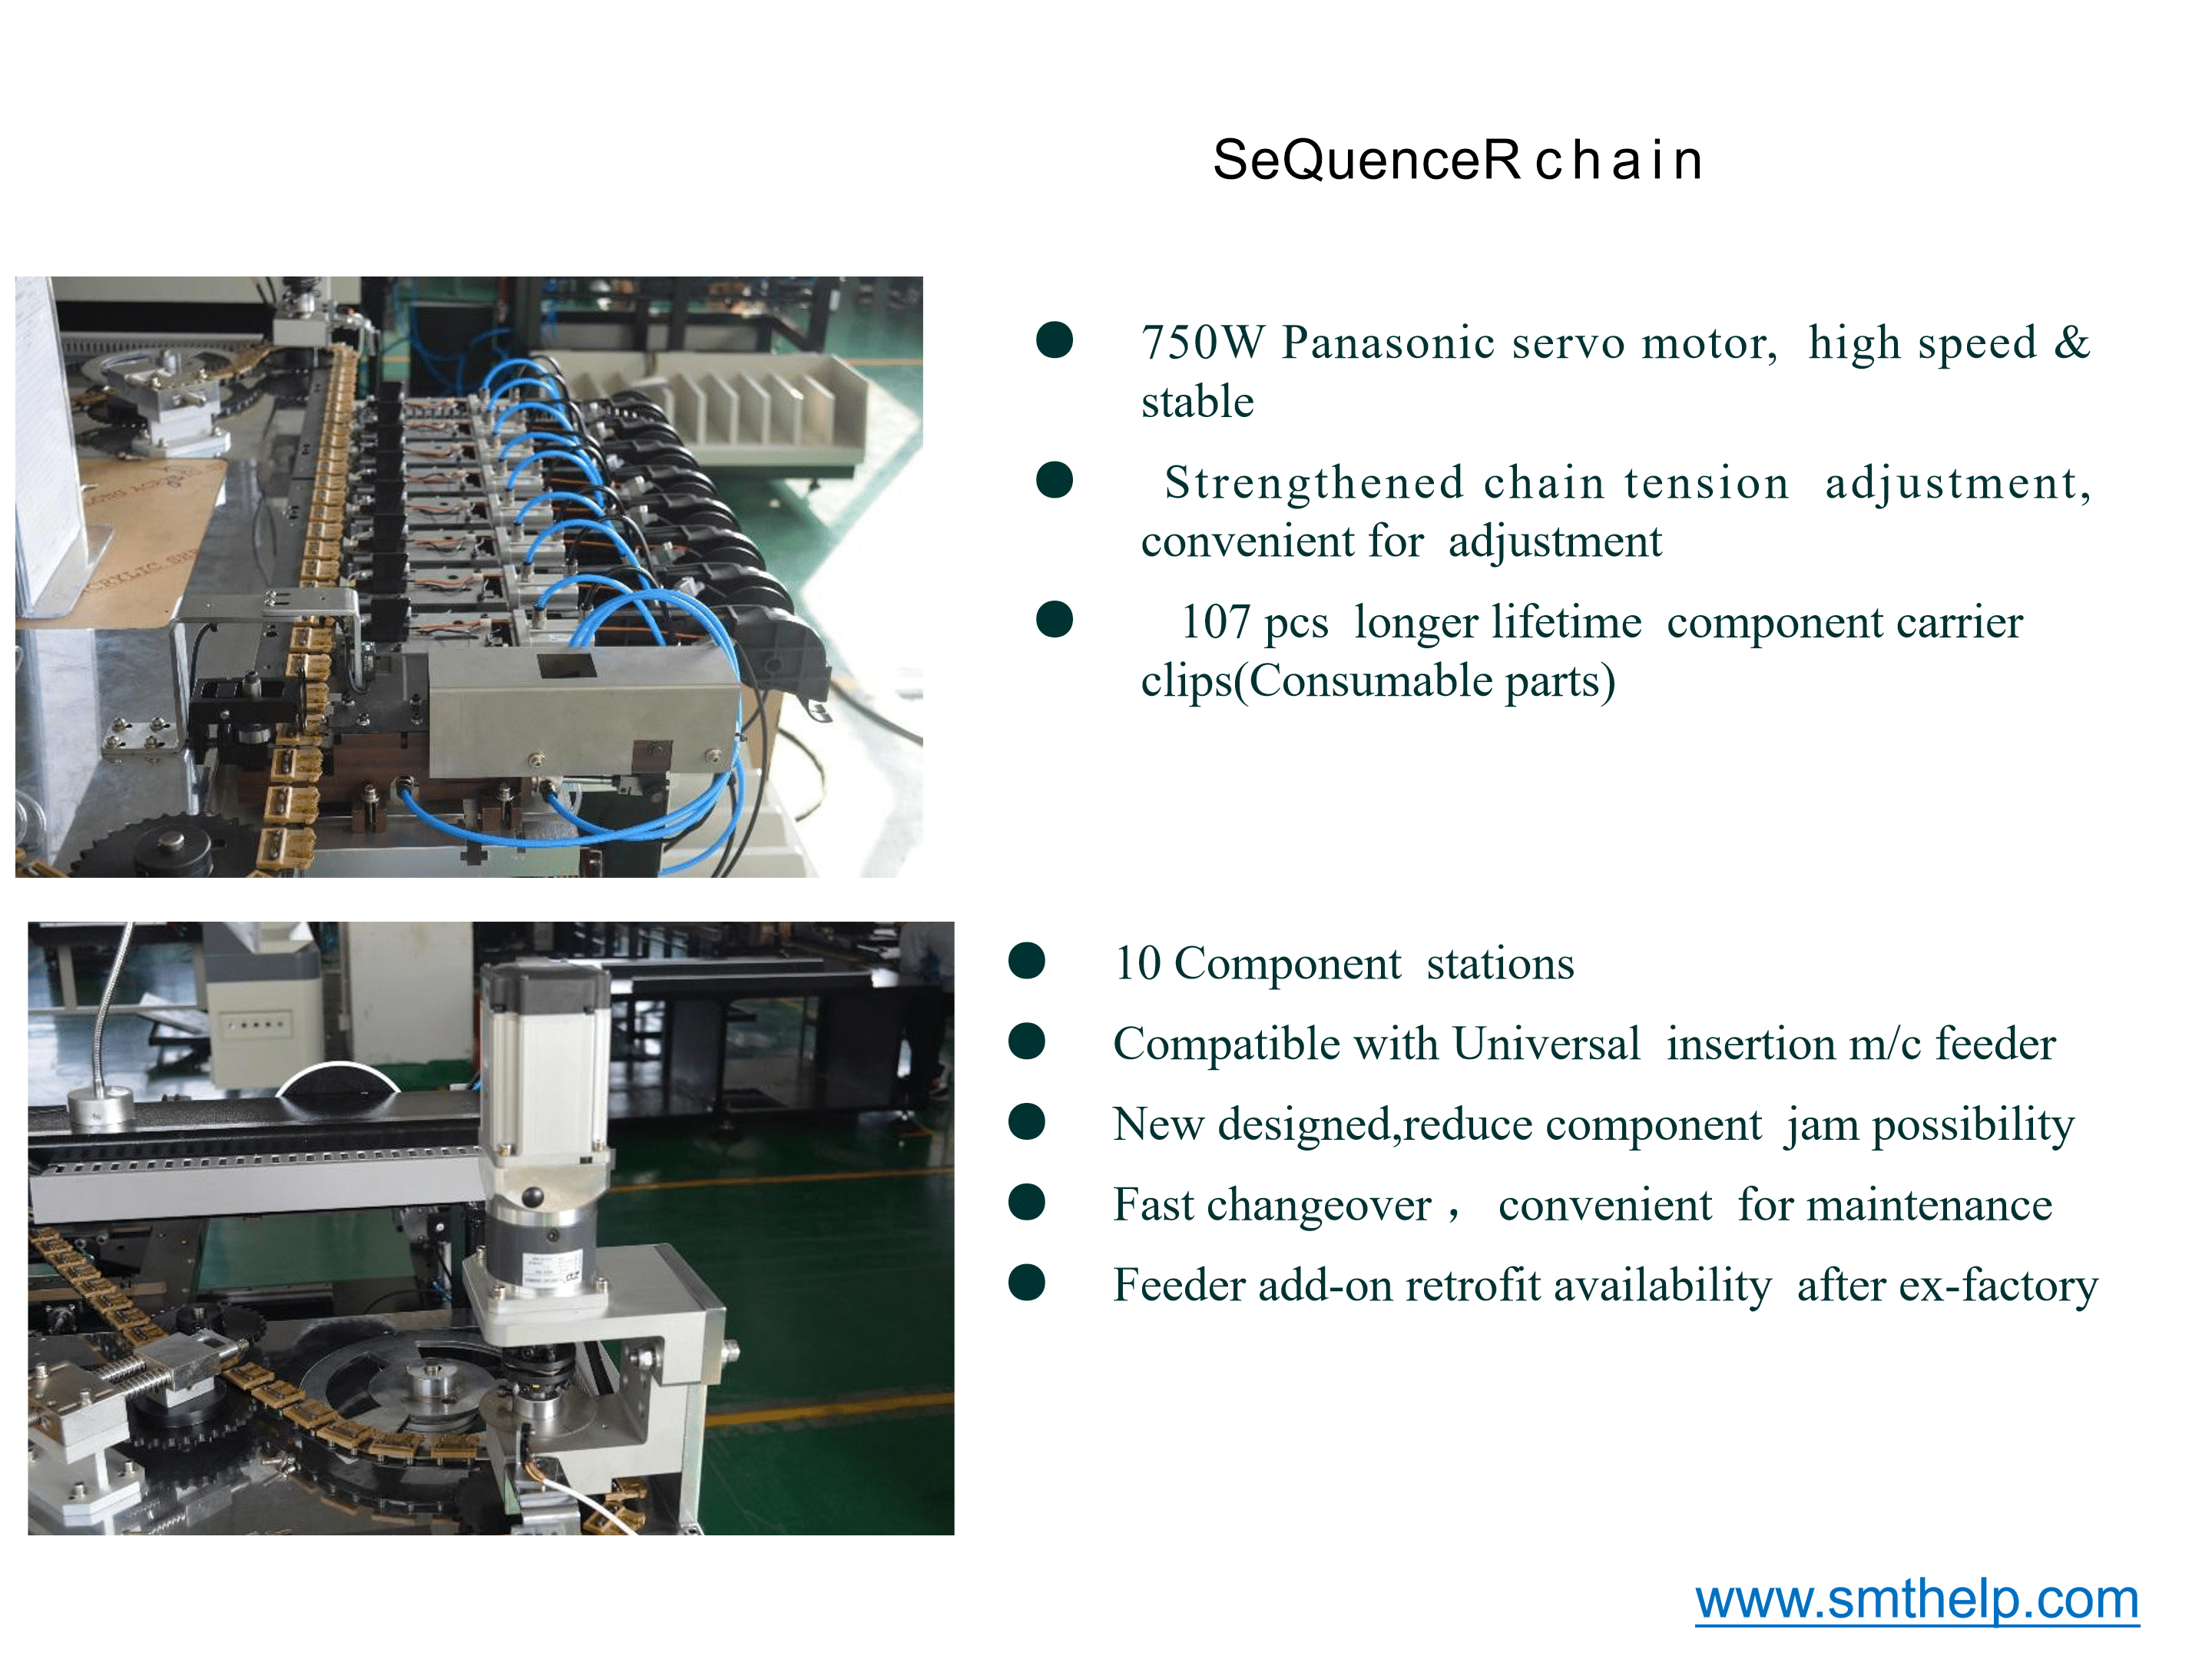 S-3010 Radial Insertion machine